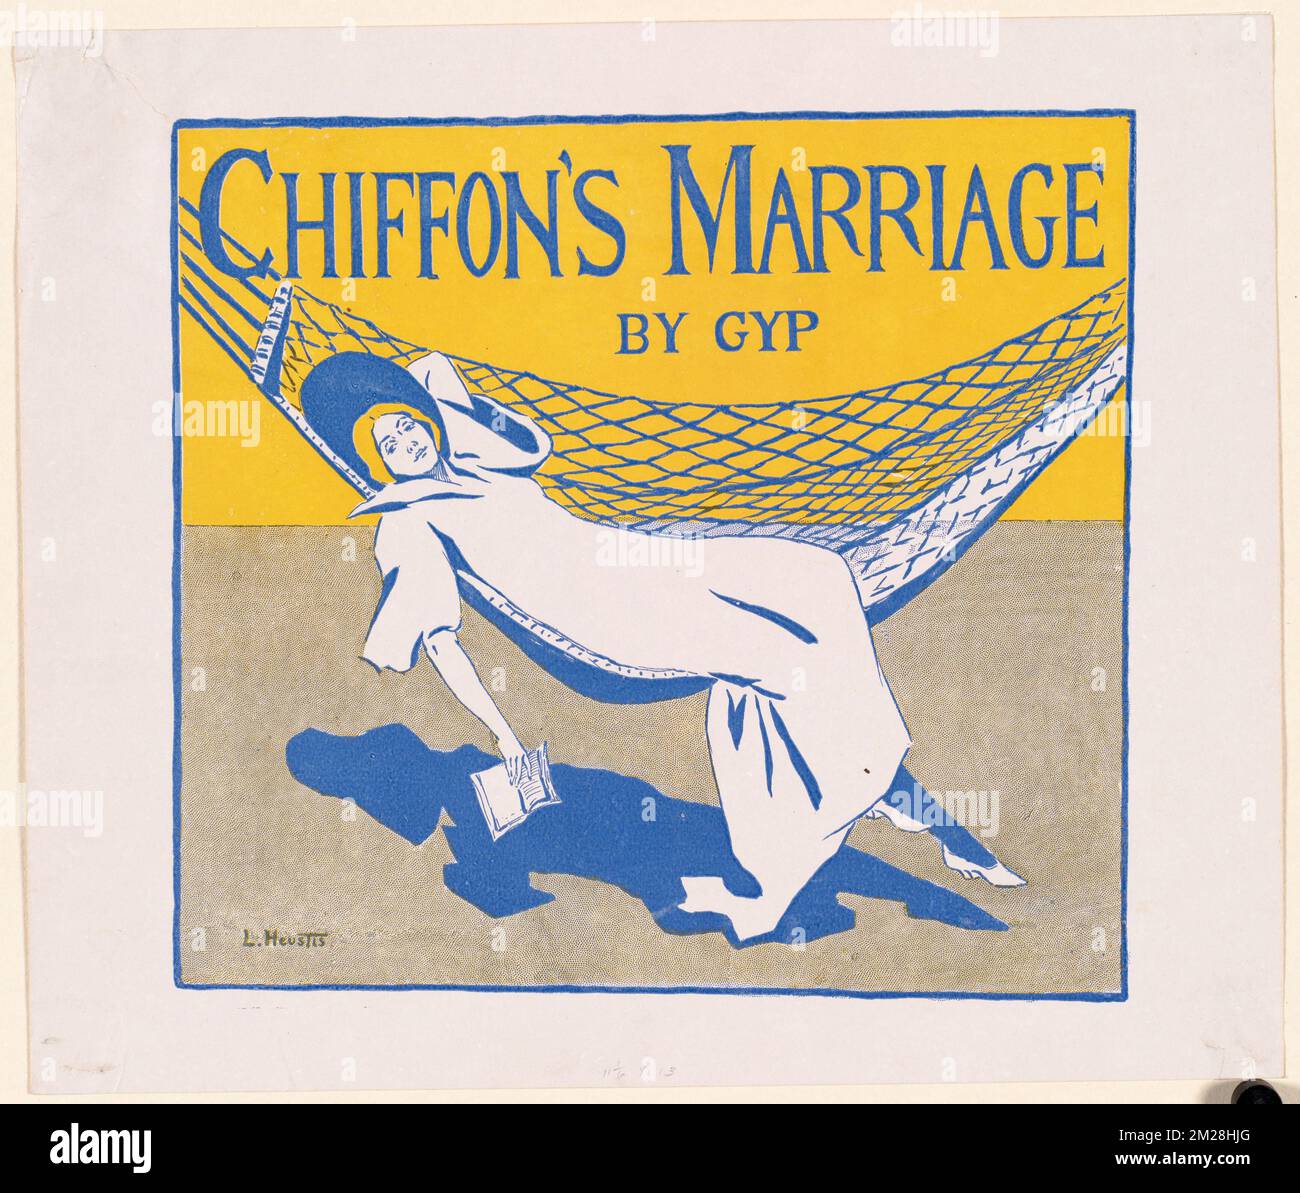 Chiffon's marriage by GYP , Hammocks Furniture, Books, Leisure Stock Photo